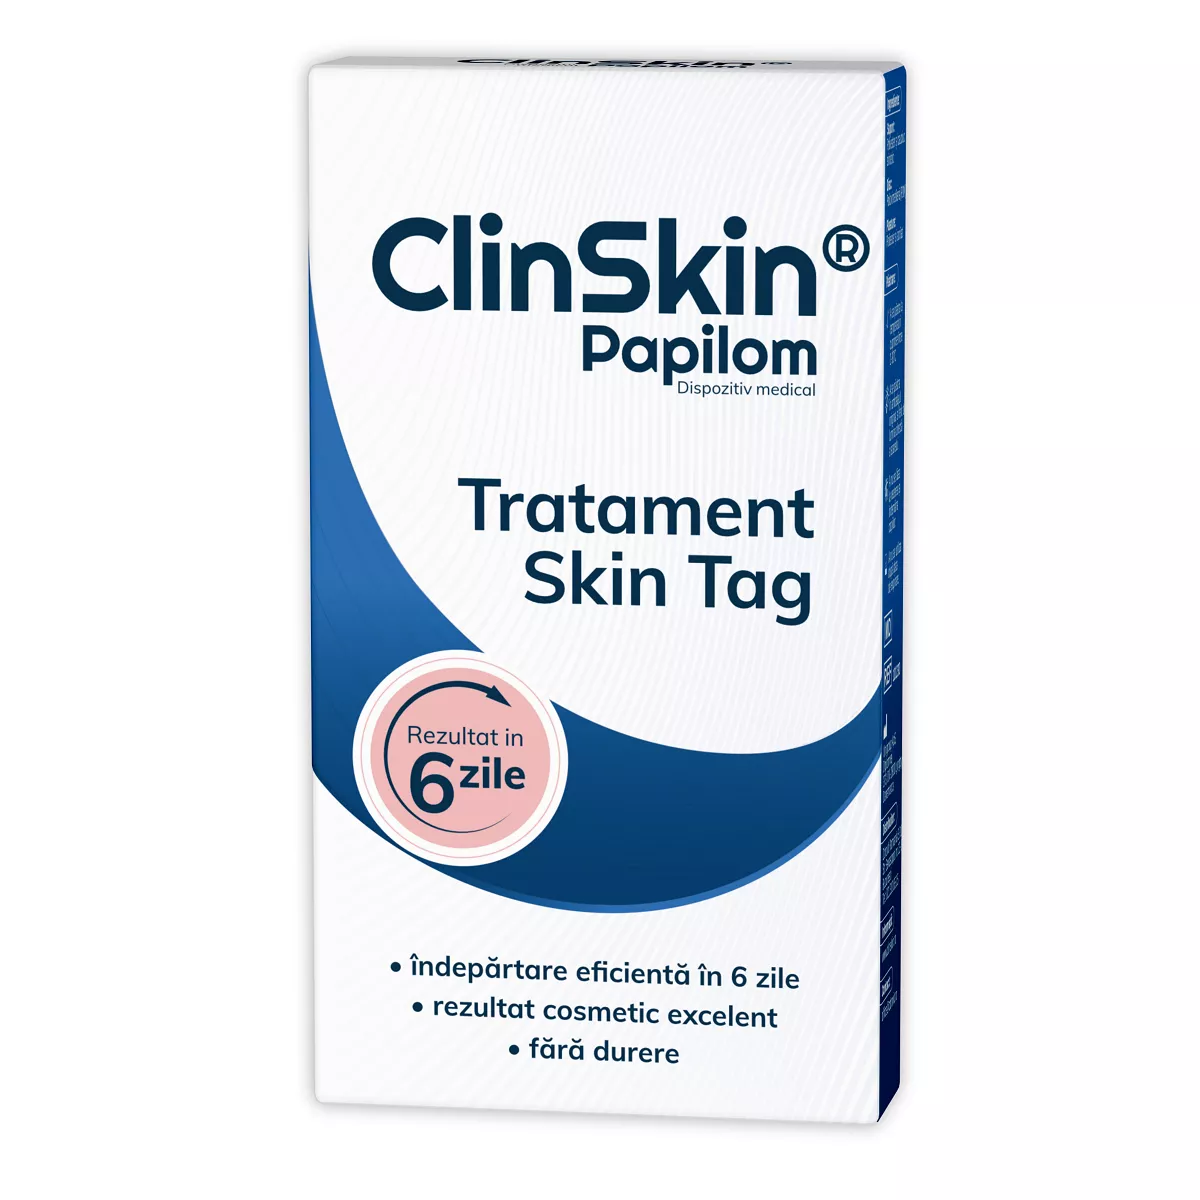 ClinSkin Papilom Tratament Skin Tag, Zdrovit, [],nordpharm.ro